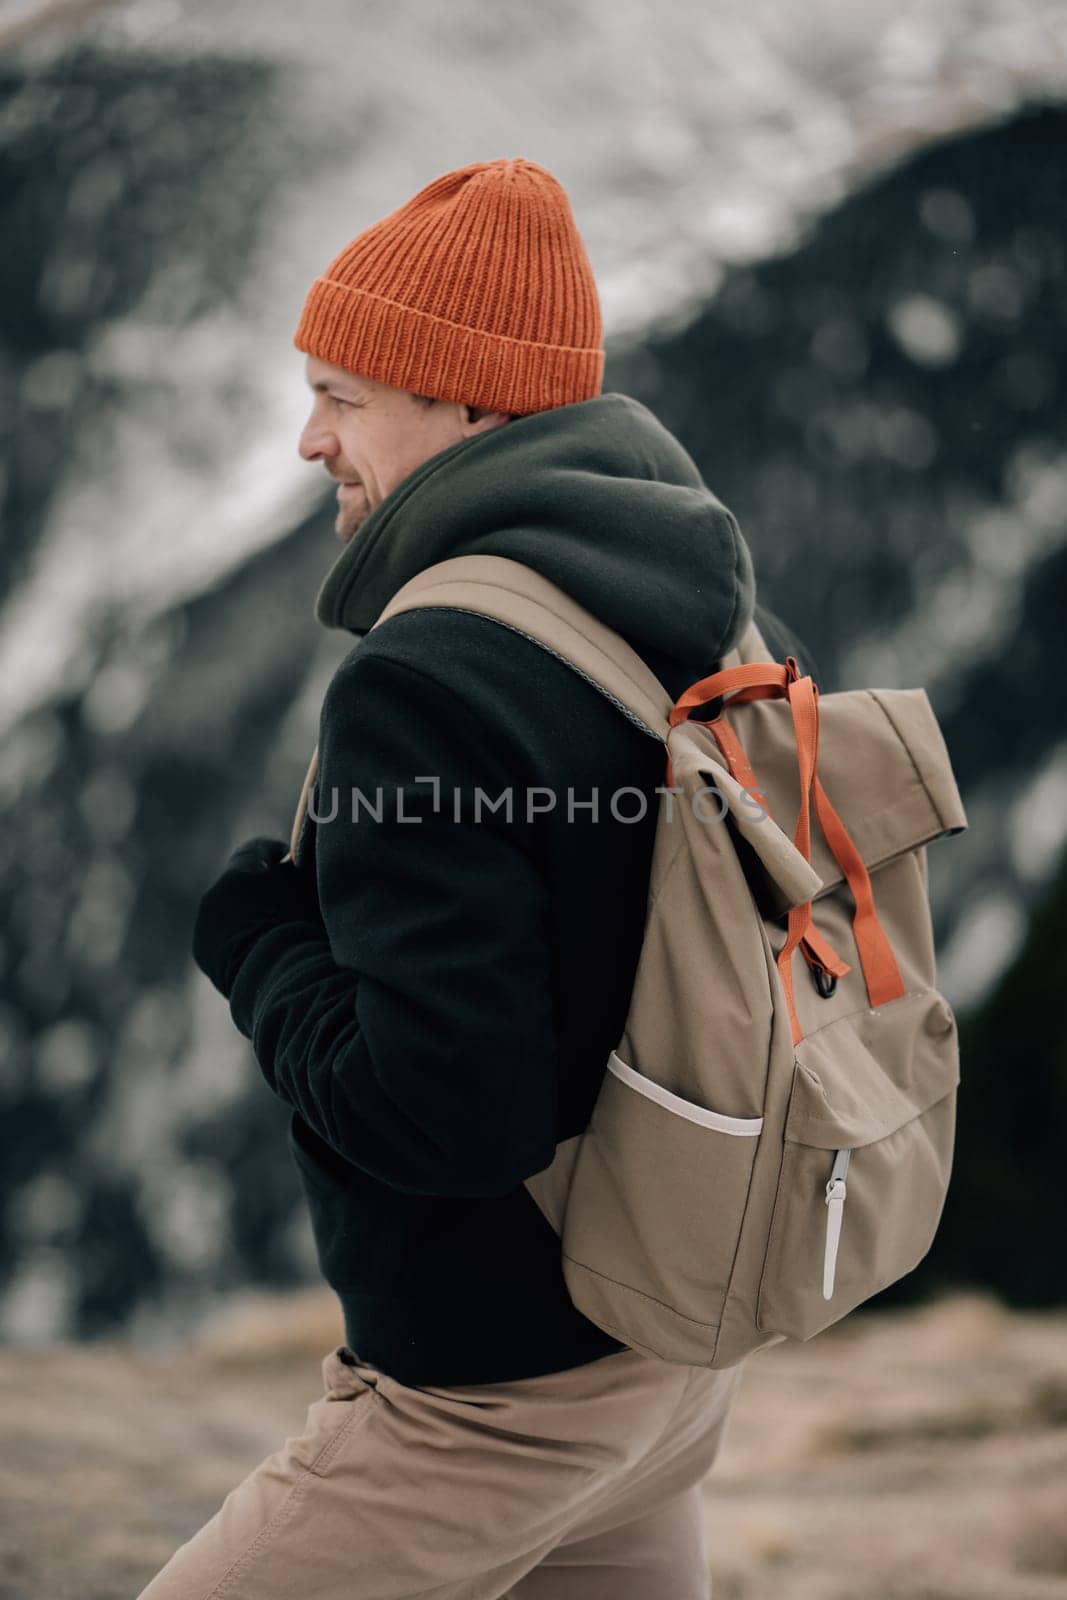 Smiling Hiker Enjoying a Snowy Mountainous Adventure by apavlin